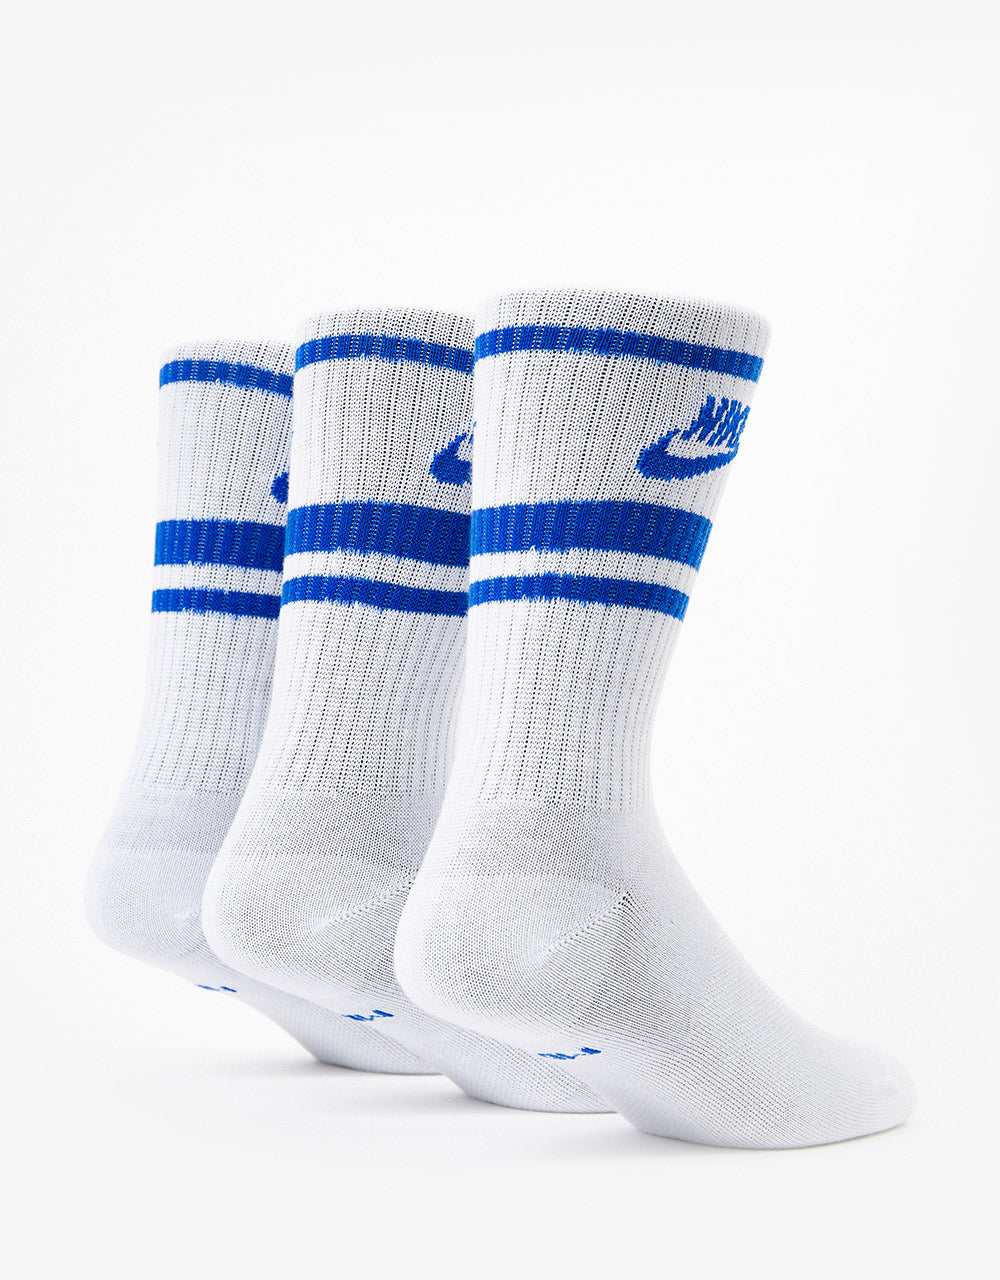 Nike  Sportswear Everyday Essential 3 Pack Socks - White/Game Royal/Game Royal